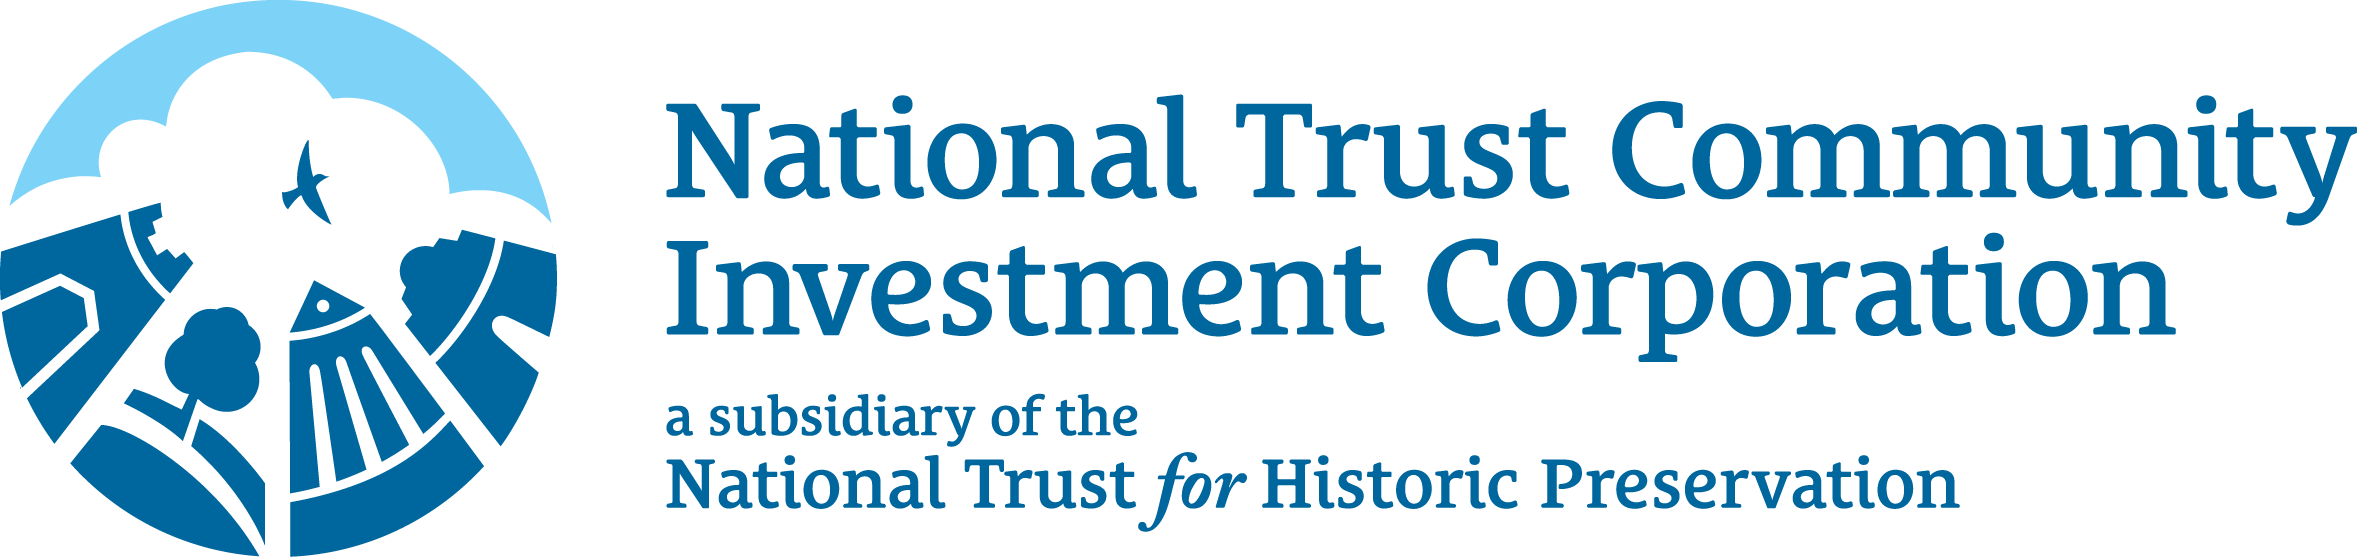 National Trust Community Investment Corporation